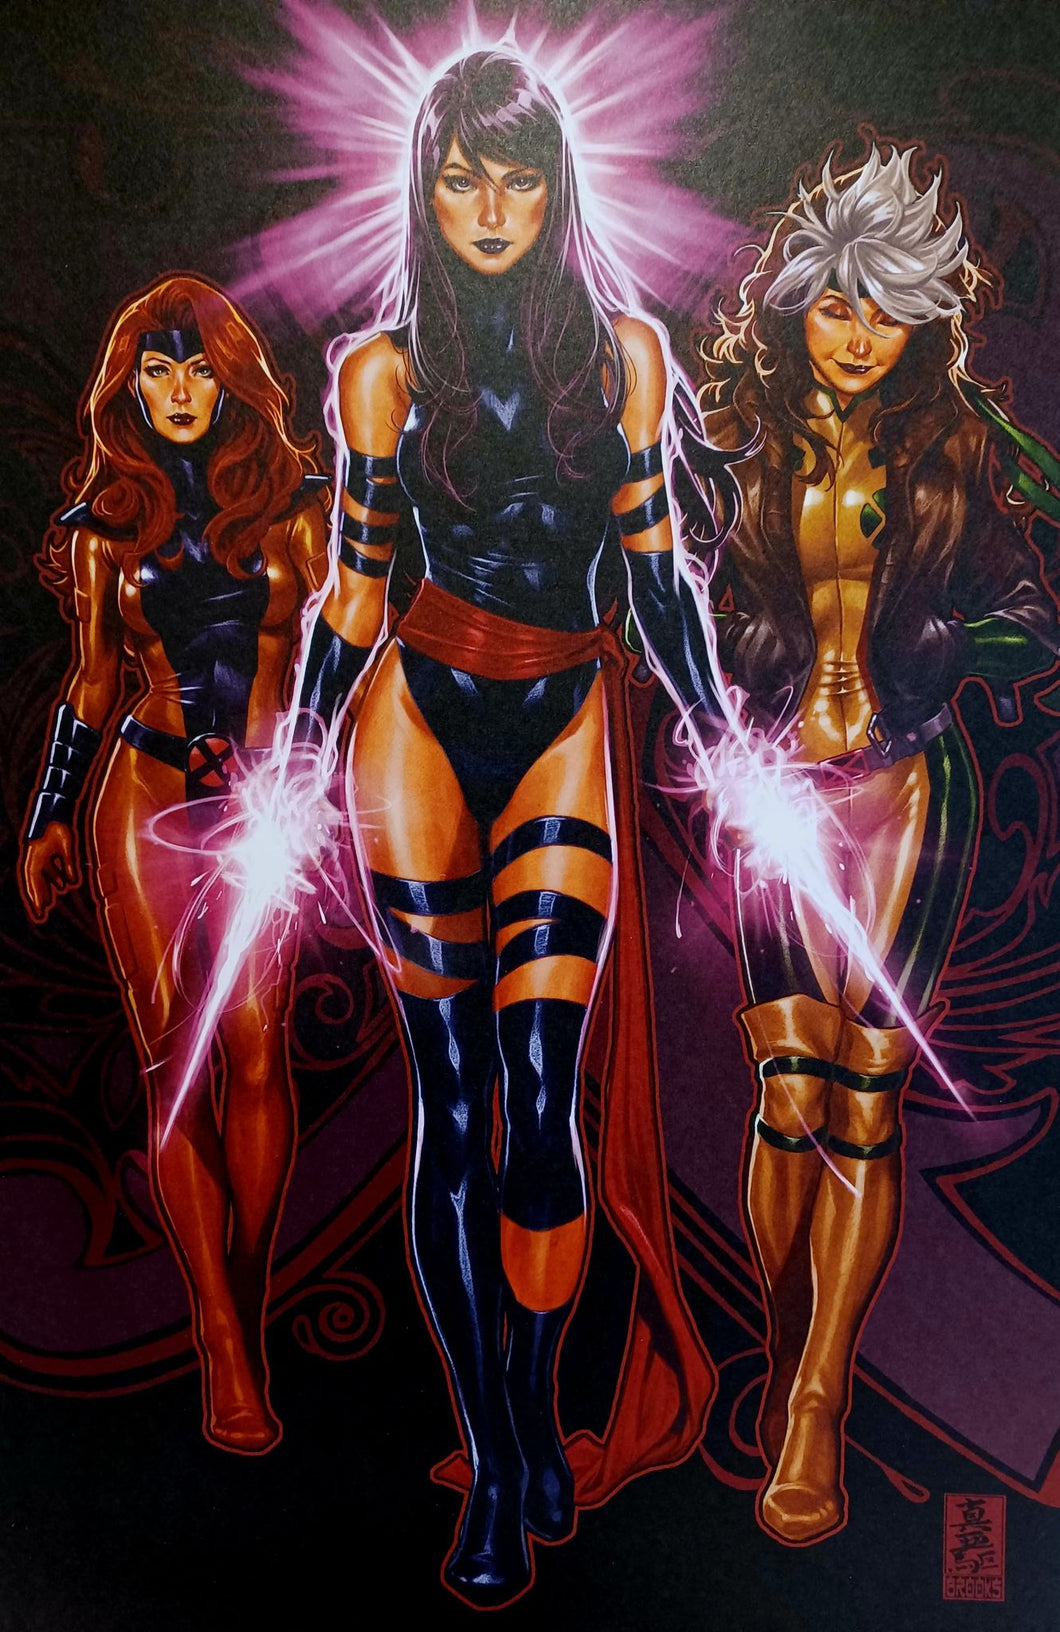 Psylocke, Rogue & Jean Grey by Mark Brooks 9.5x14.25 Art Poster Print New Marvel Comics